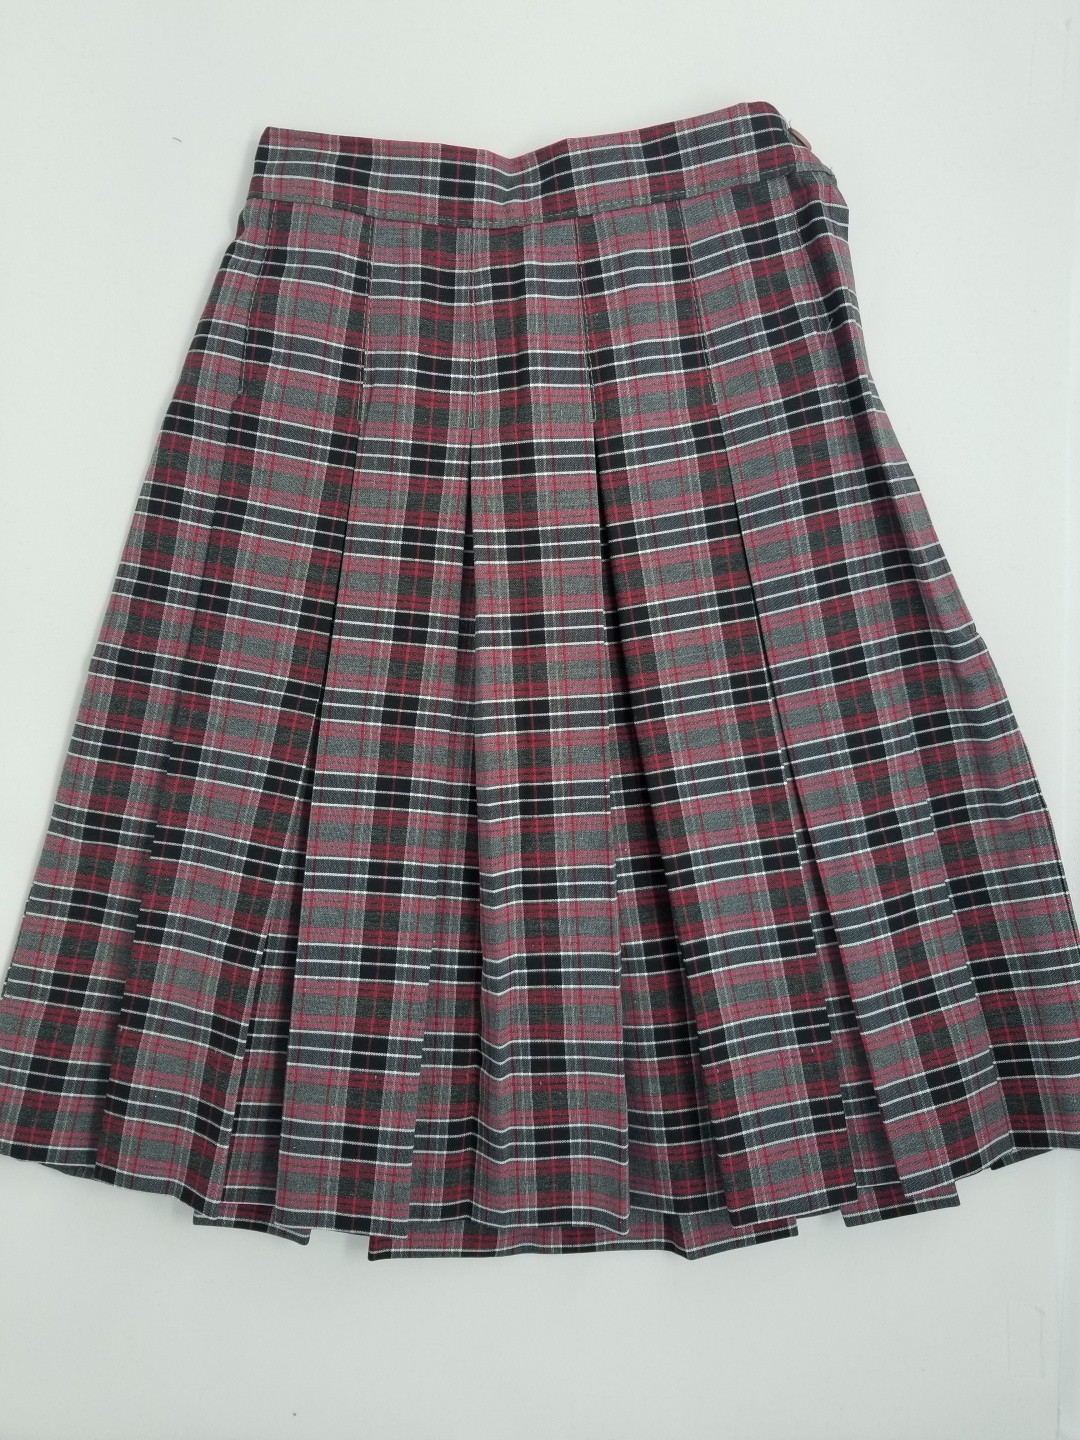 Stitch Down Pleat Skirt- Style 11-Plaid 41